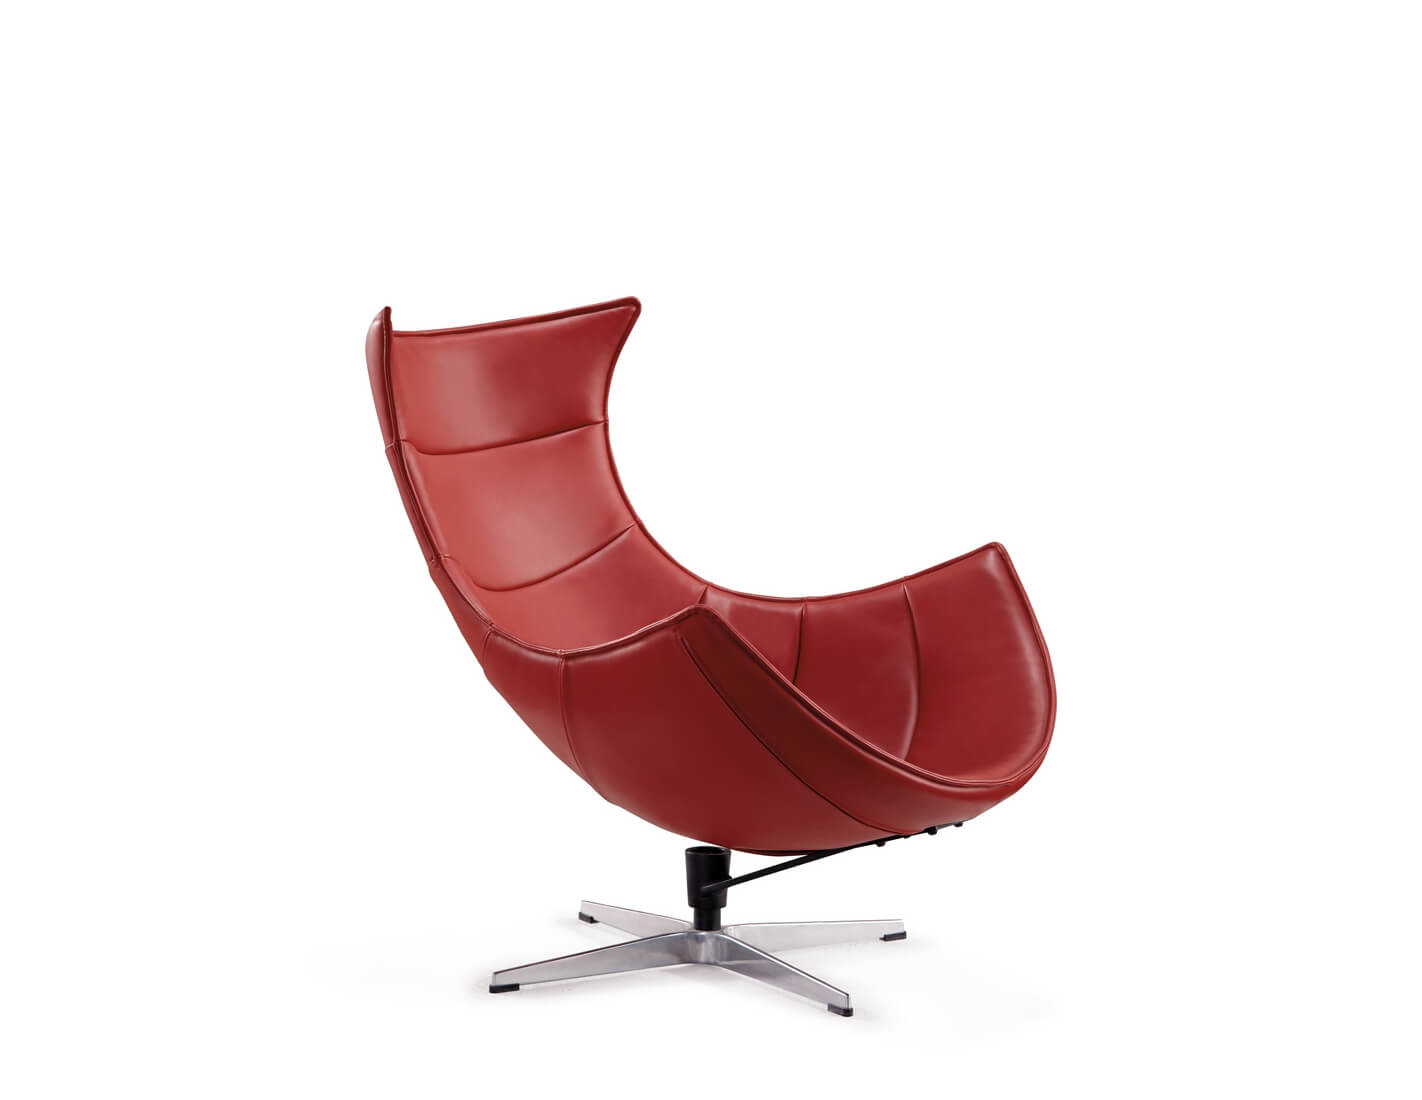 barrière bellen Ambitieus Lobster Red Leather Designer Lounge Chair | IDWorkspace Furniture N...